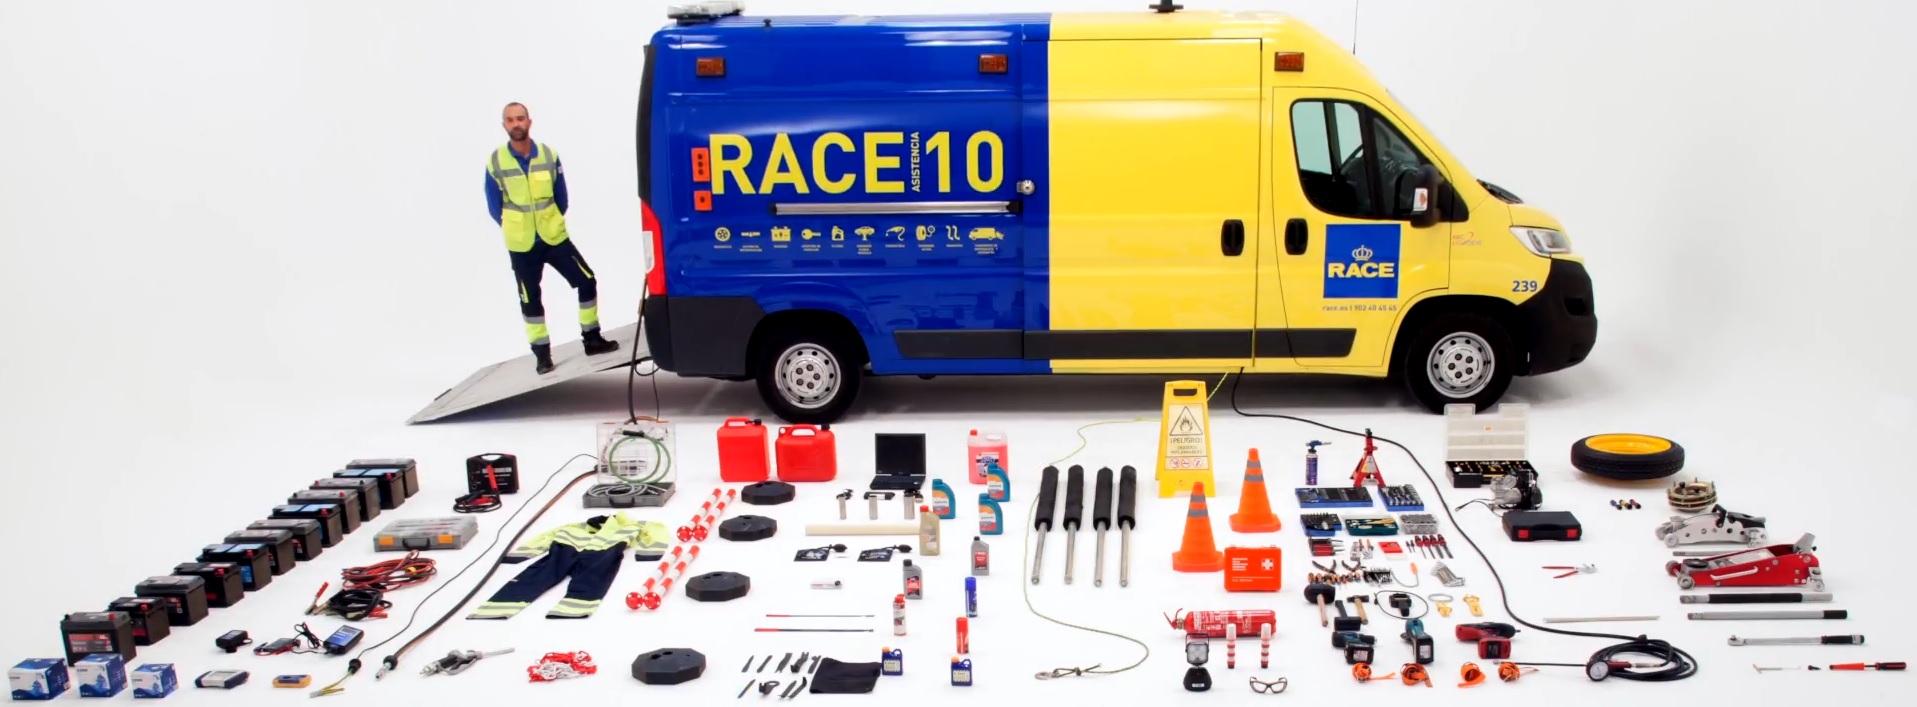 Vehiclulo RACE10 - Flota de asistencia del RACE